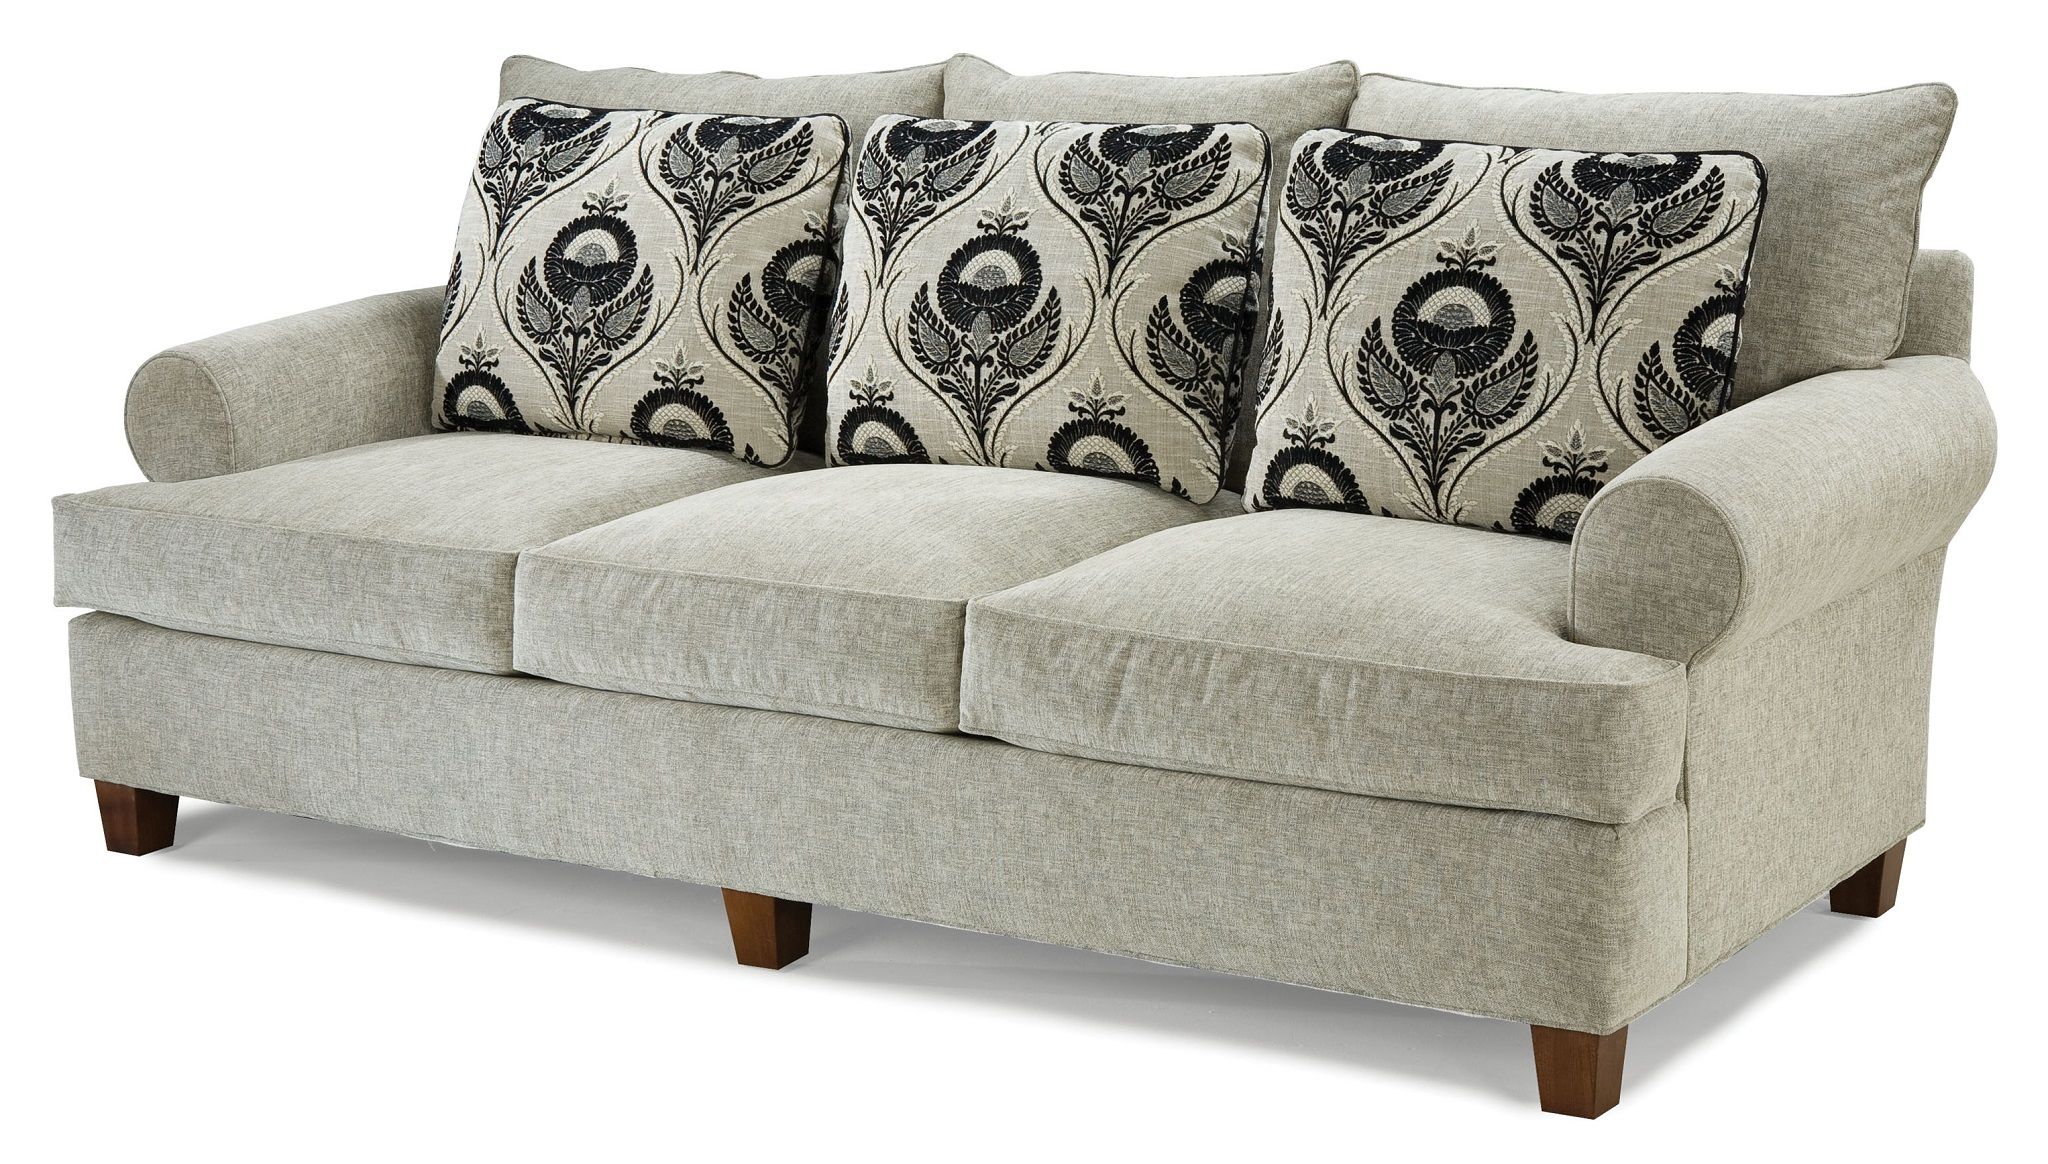 Decorative Throw Pillows For Minimalist Sofa (View 20 of 20)